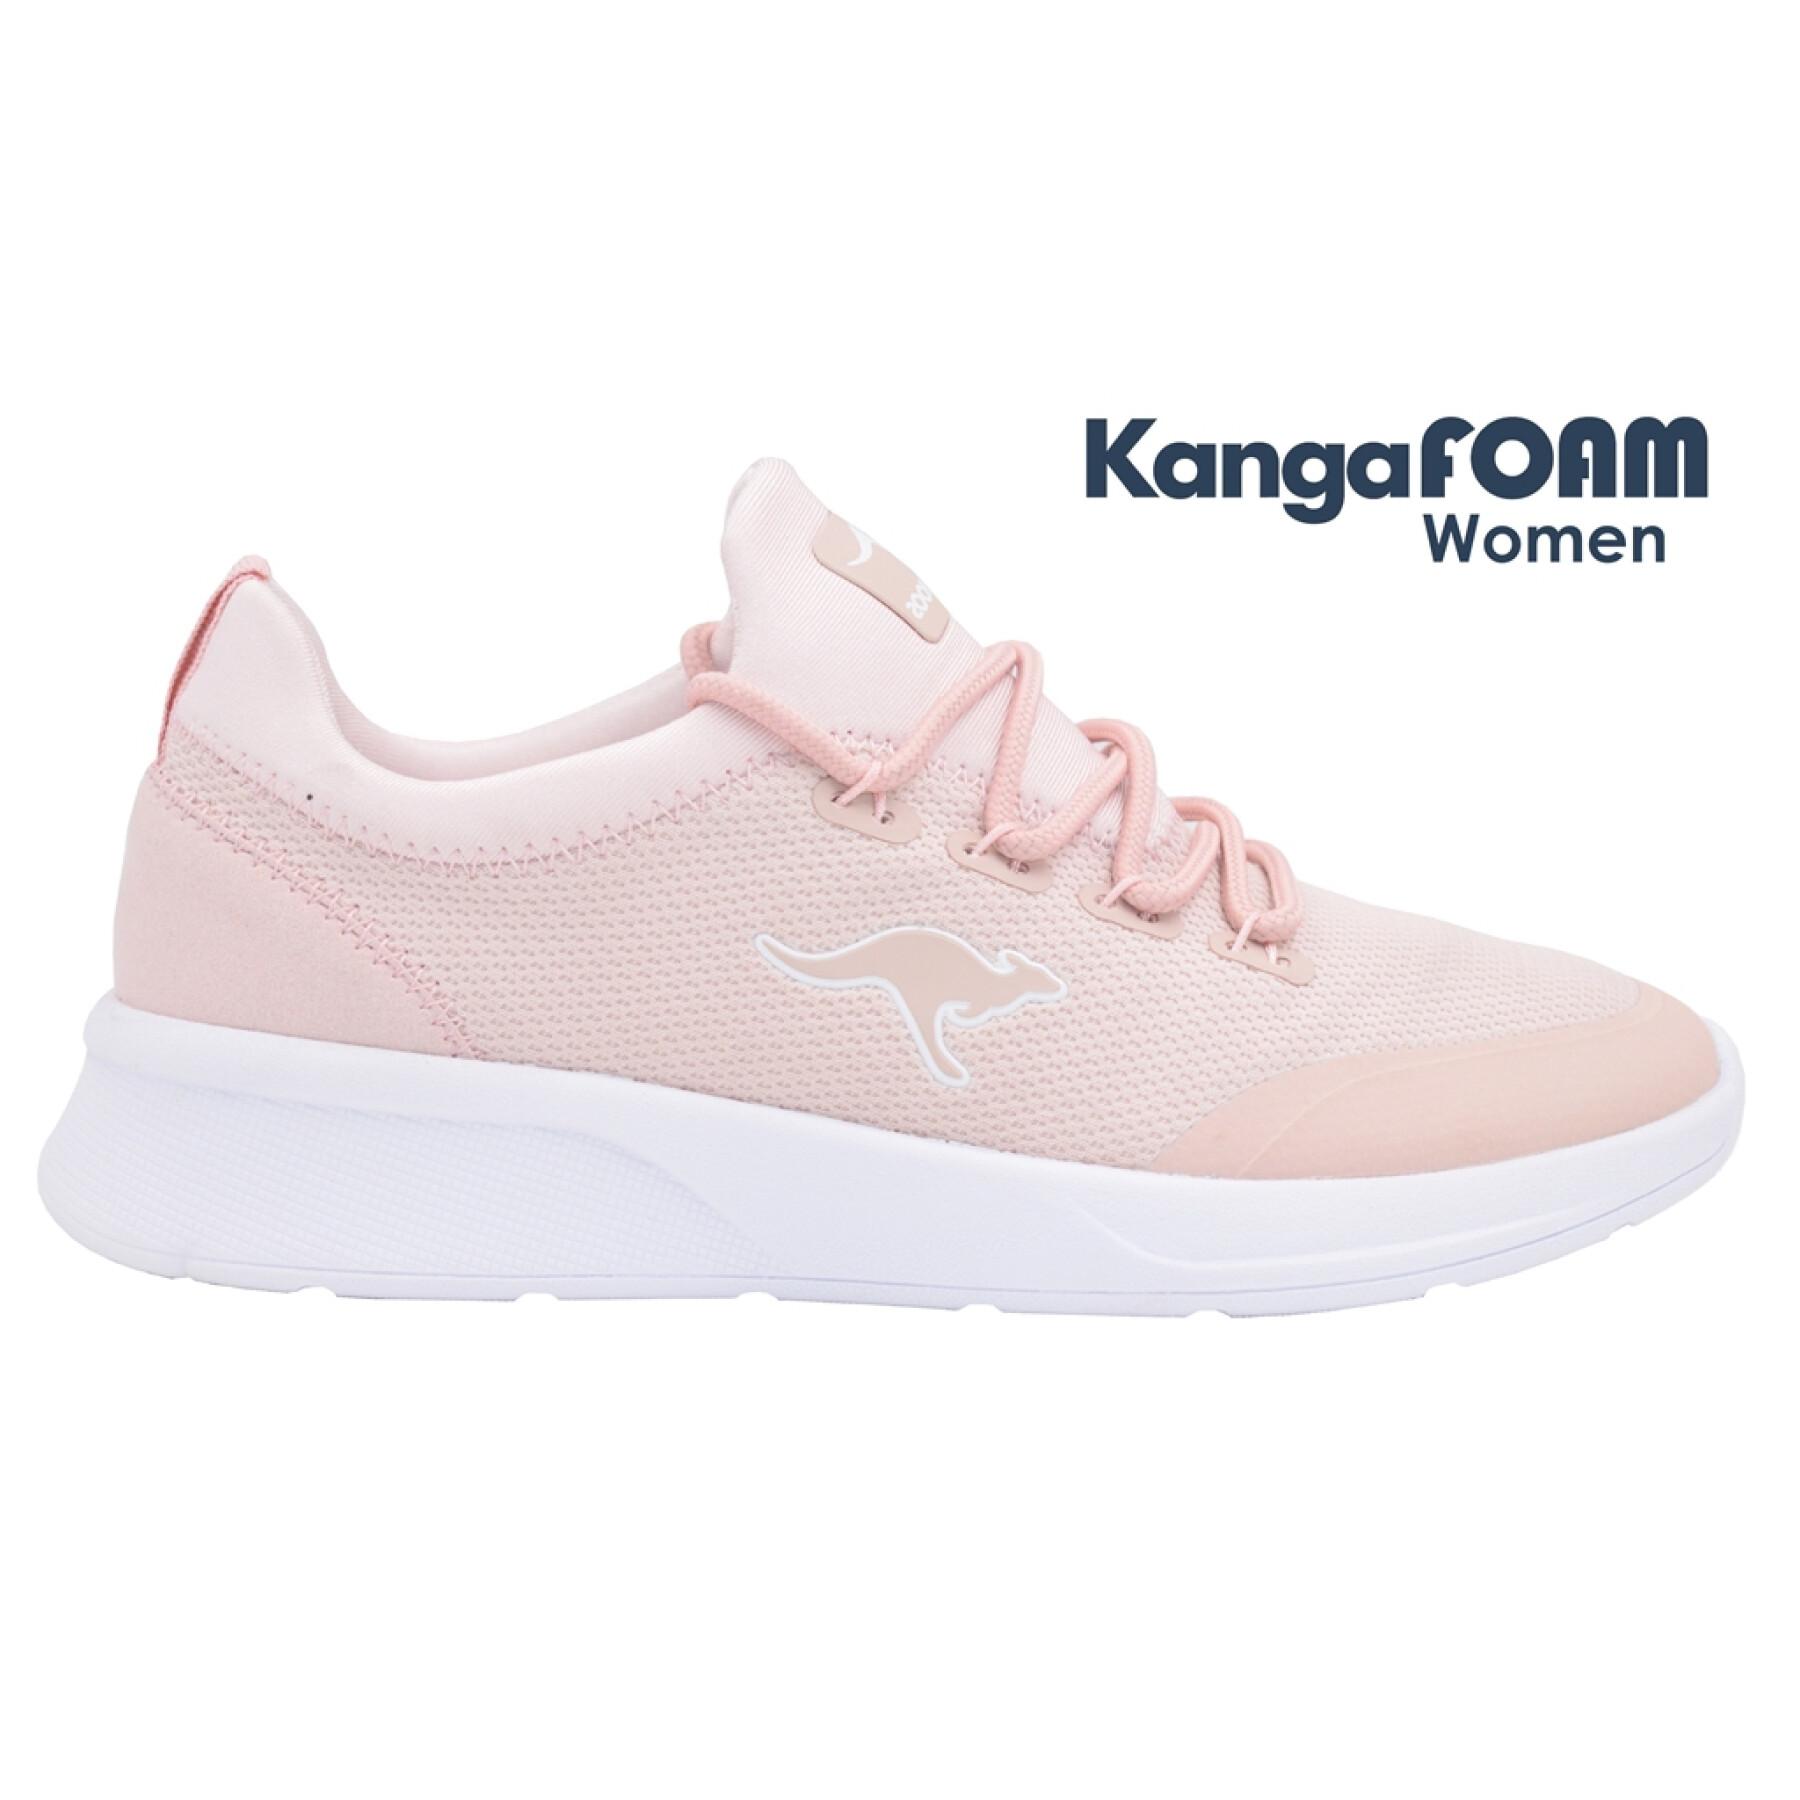 Women's sneakers KangaROOS KF-A Glide